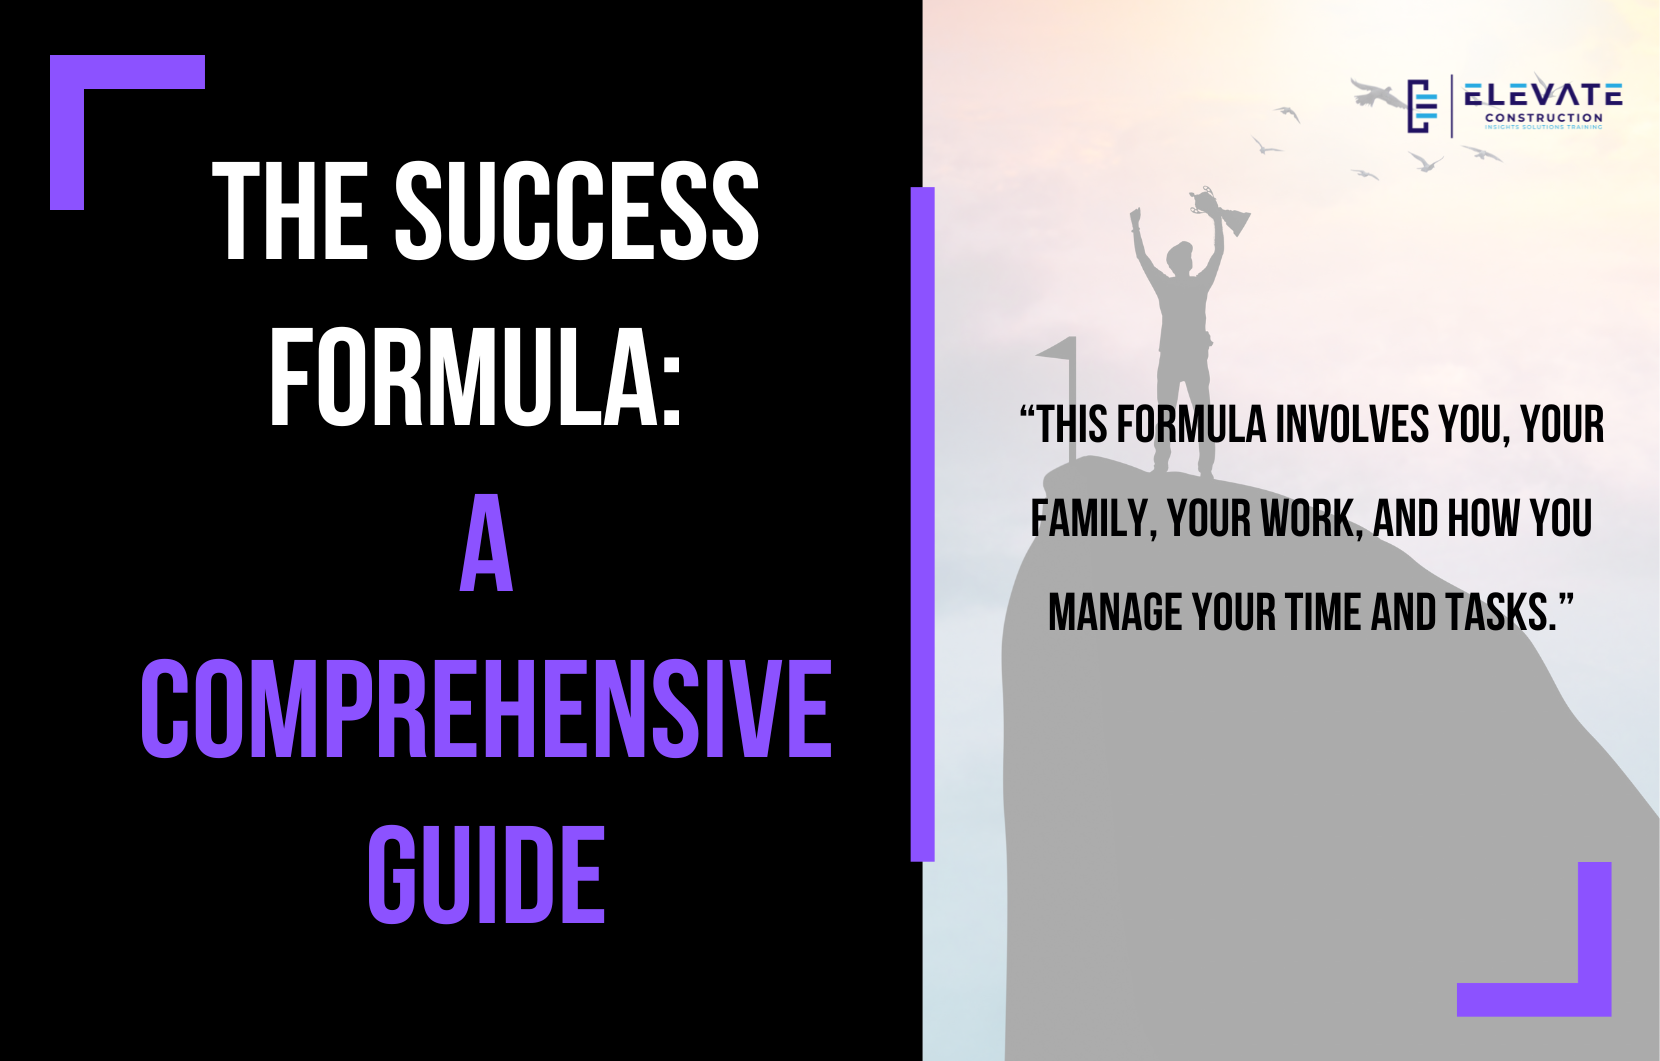 The success formula: A comprehensive guide